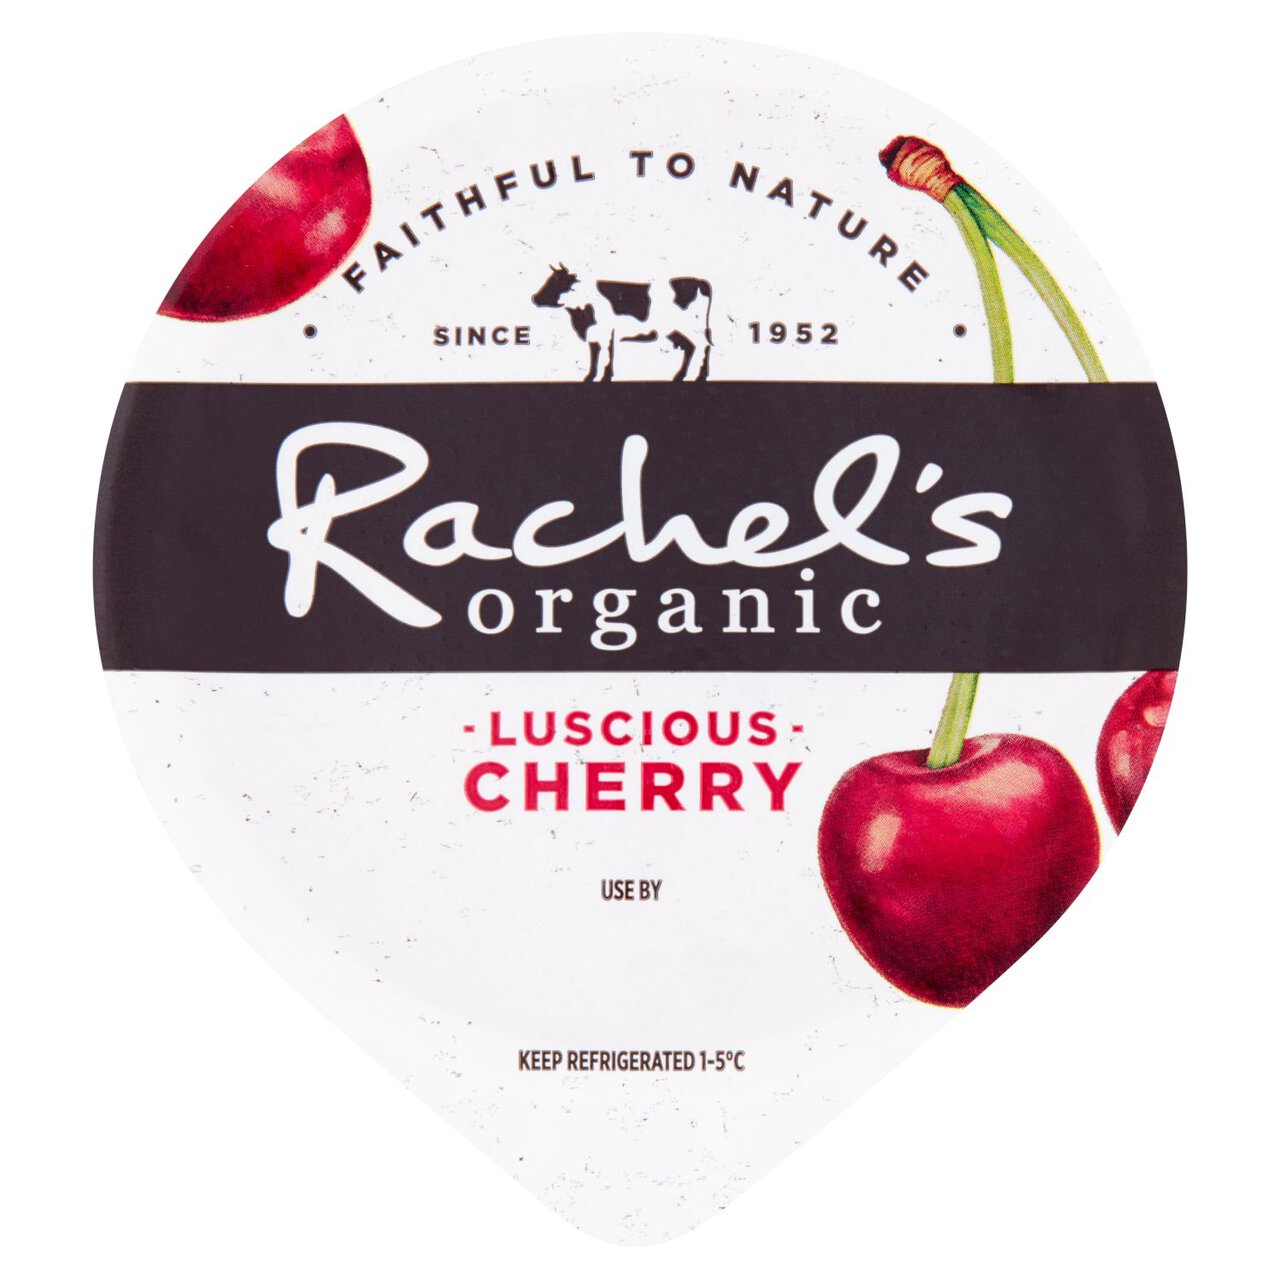 Rachel's Organic Yog Thick & Creamy Forbidden Cherry 150g